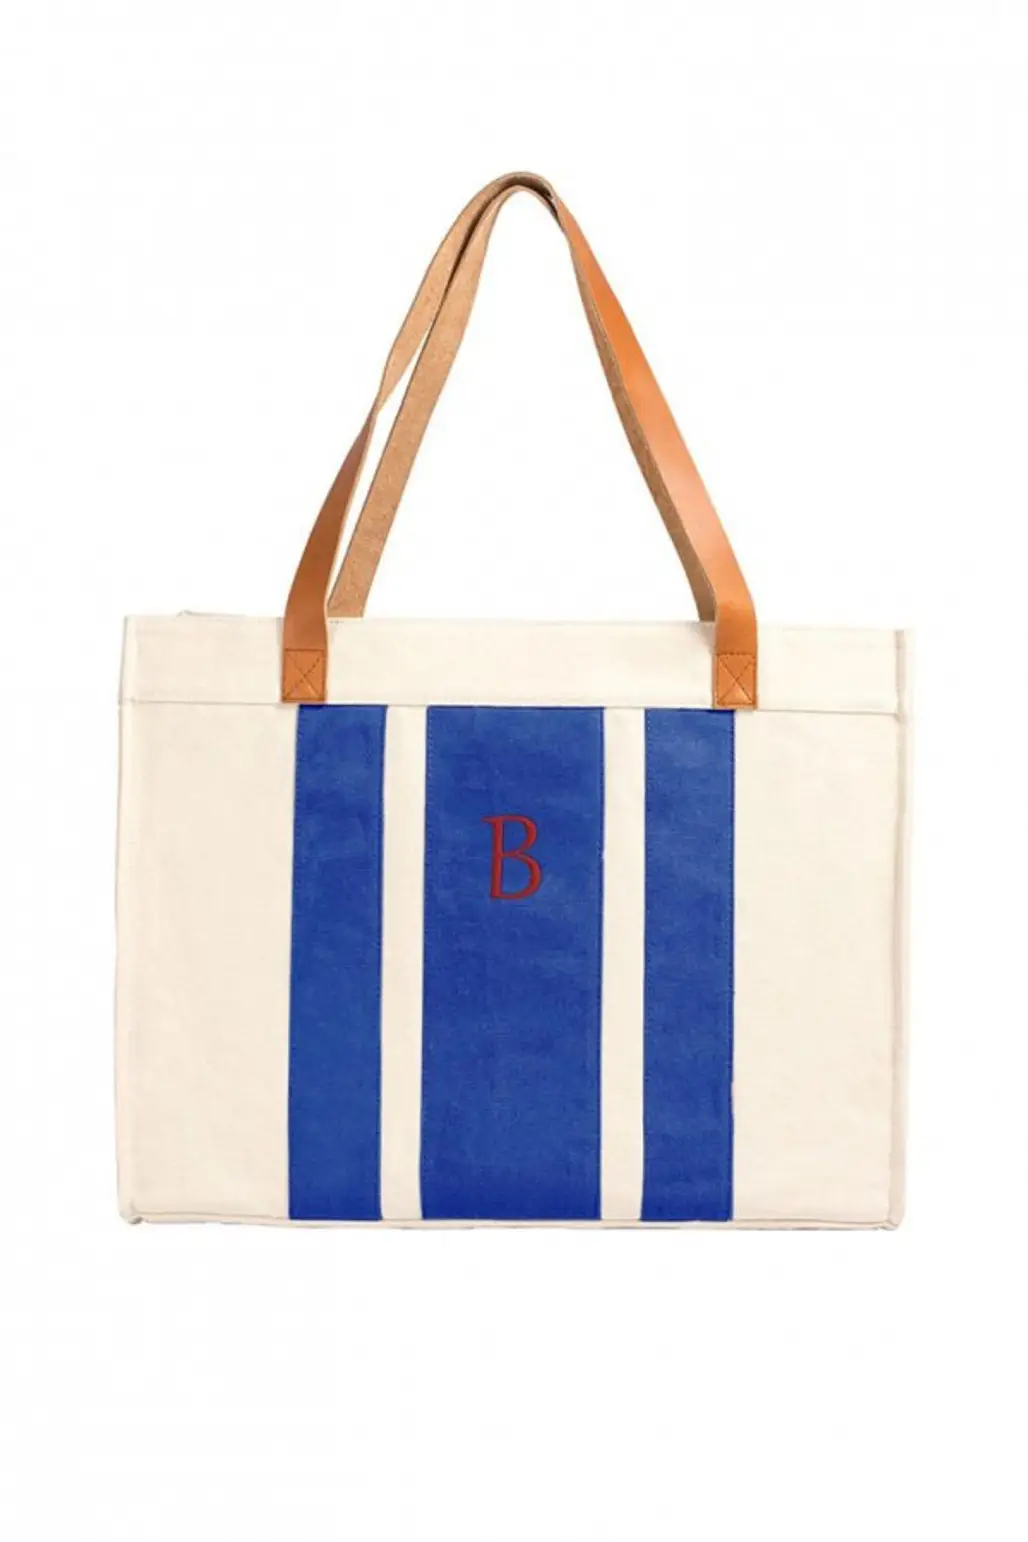 handbag, bag, shoulder bag, fashion accessory, tote bag,